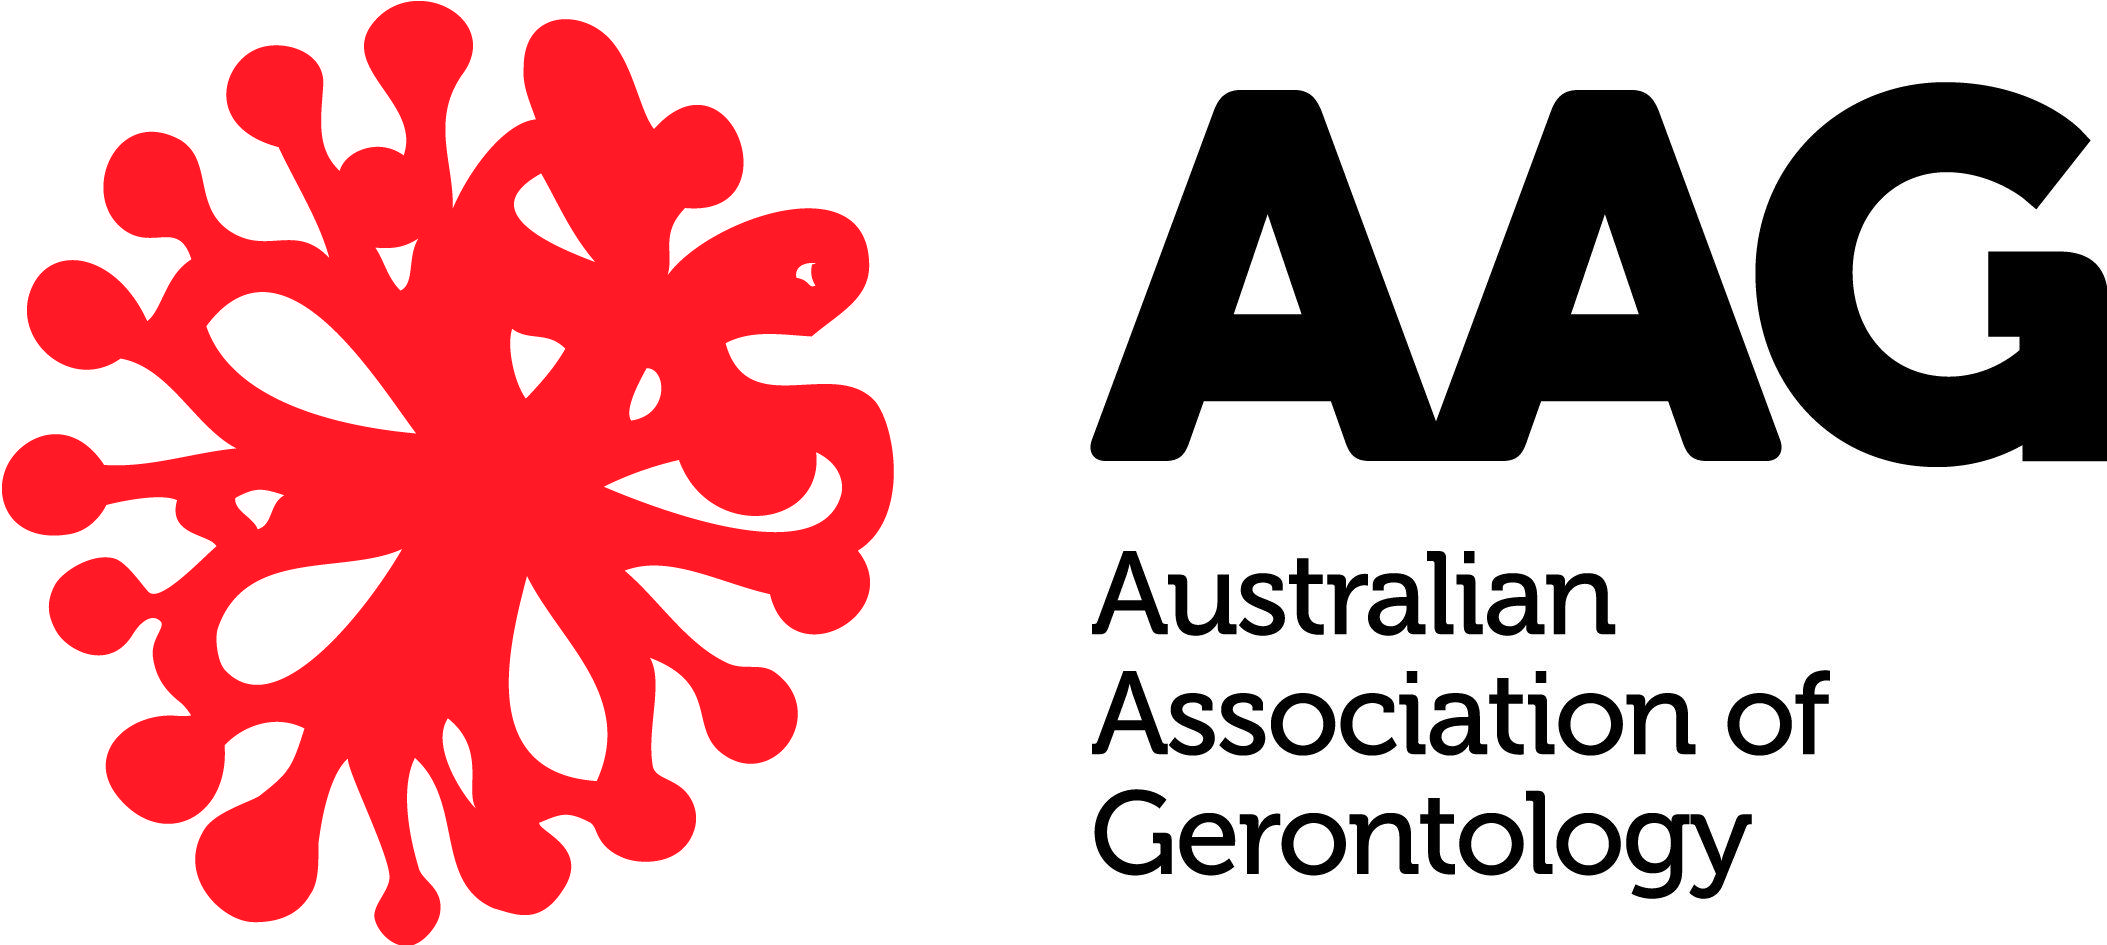 Aag Logo - Australian Association of Gerontology